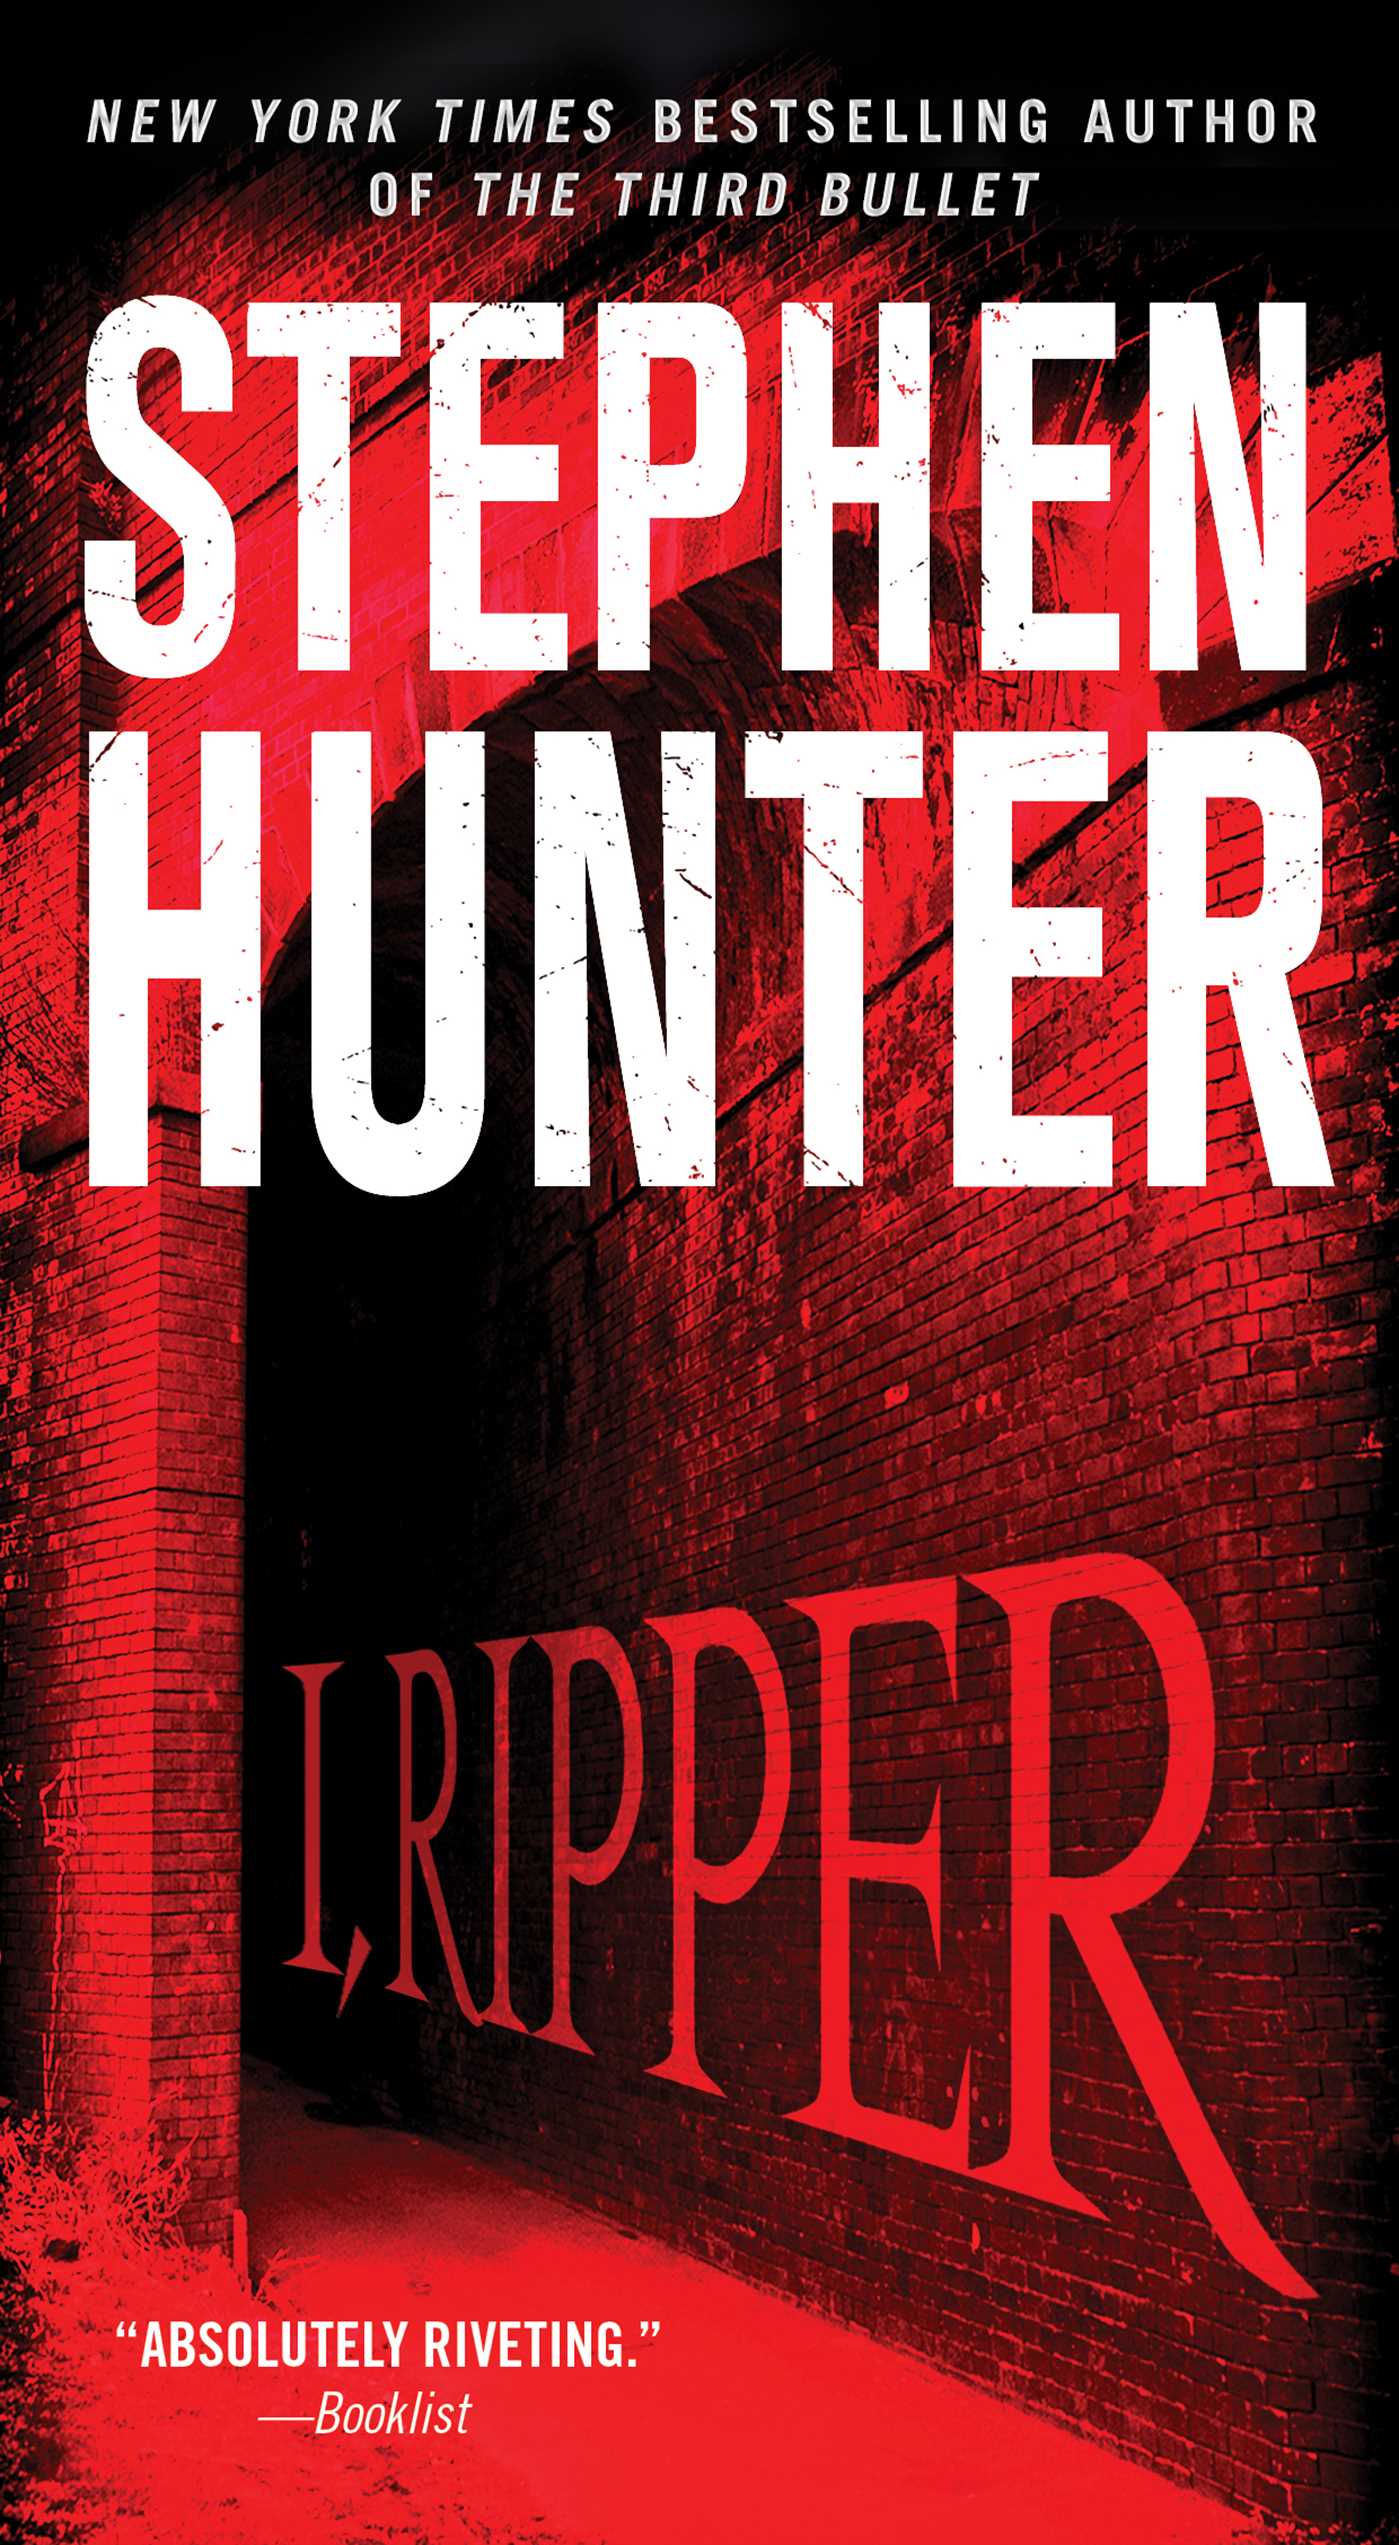 I, Ripper cover image